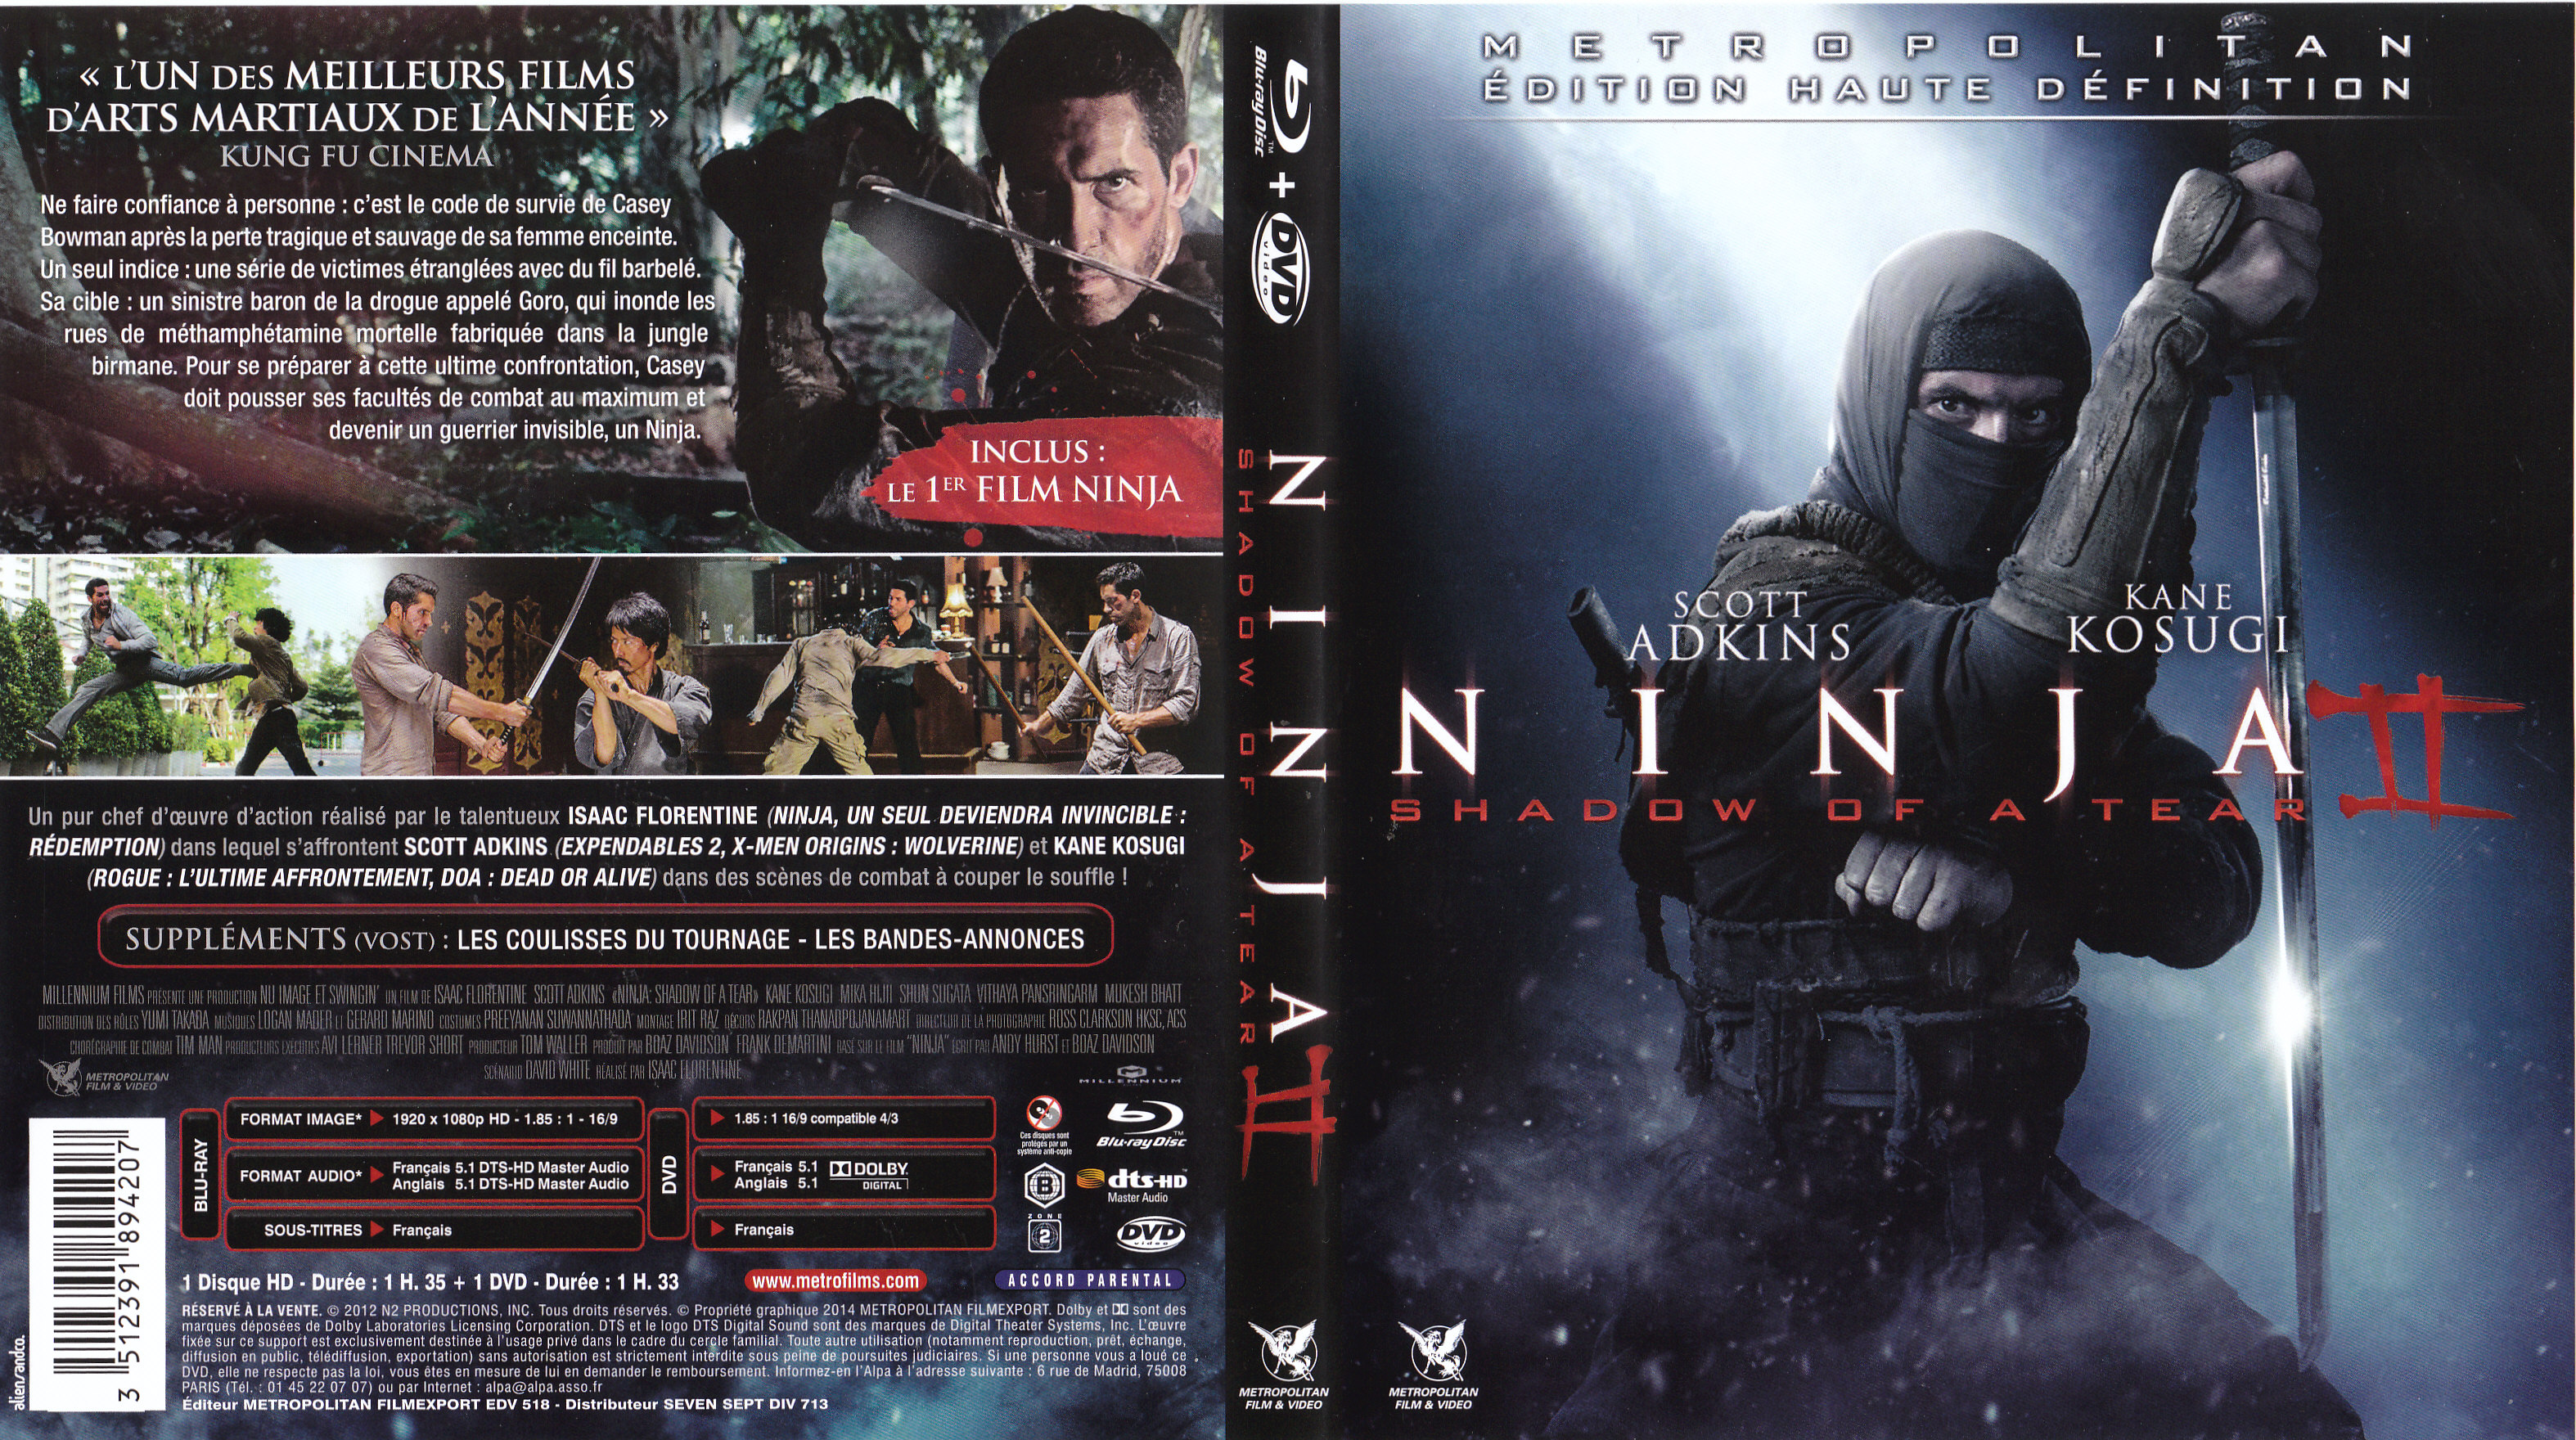 Jaquette DVD Ninja 2 : Shadow of a Tear (BLU-RAY)